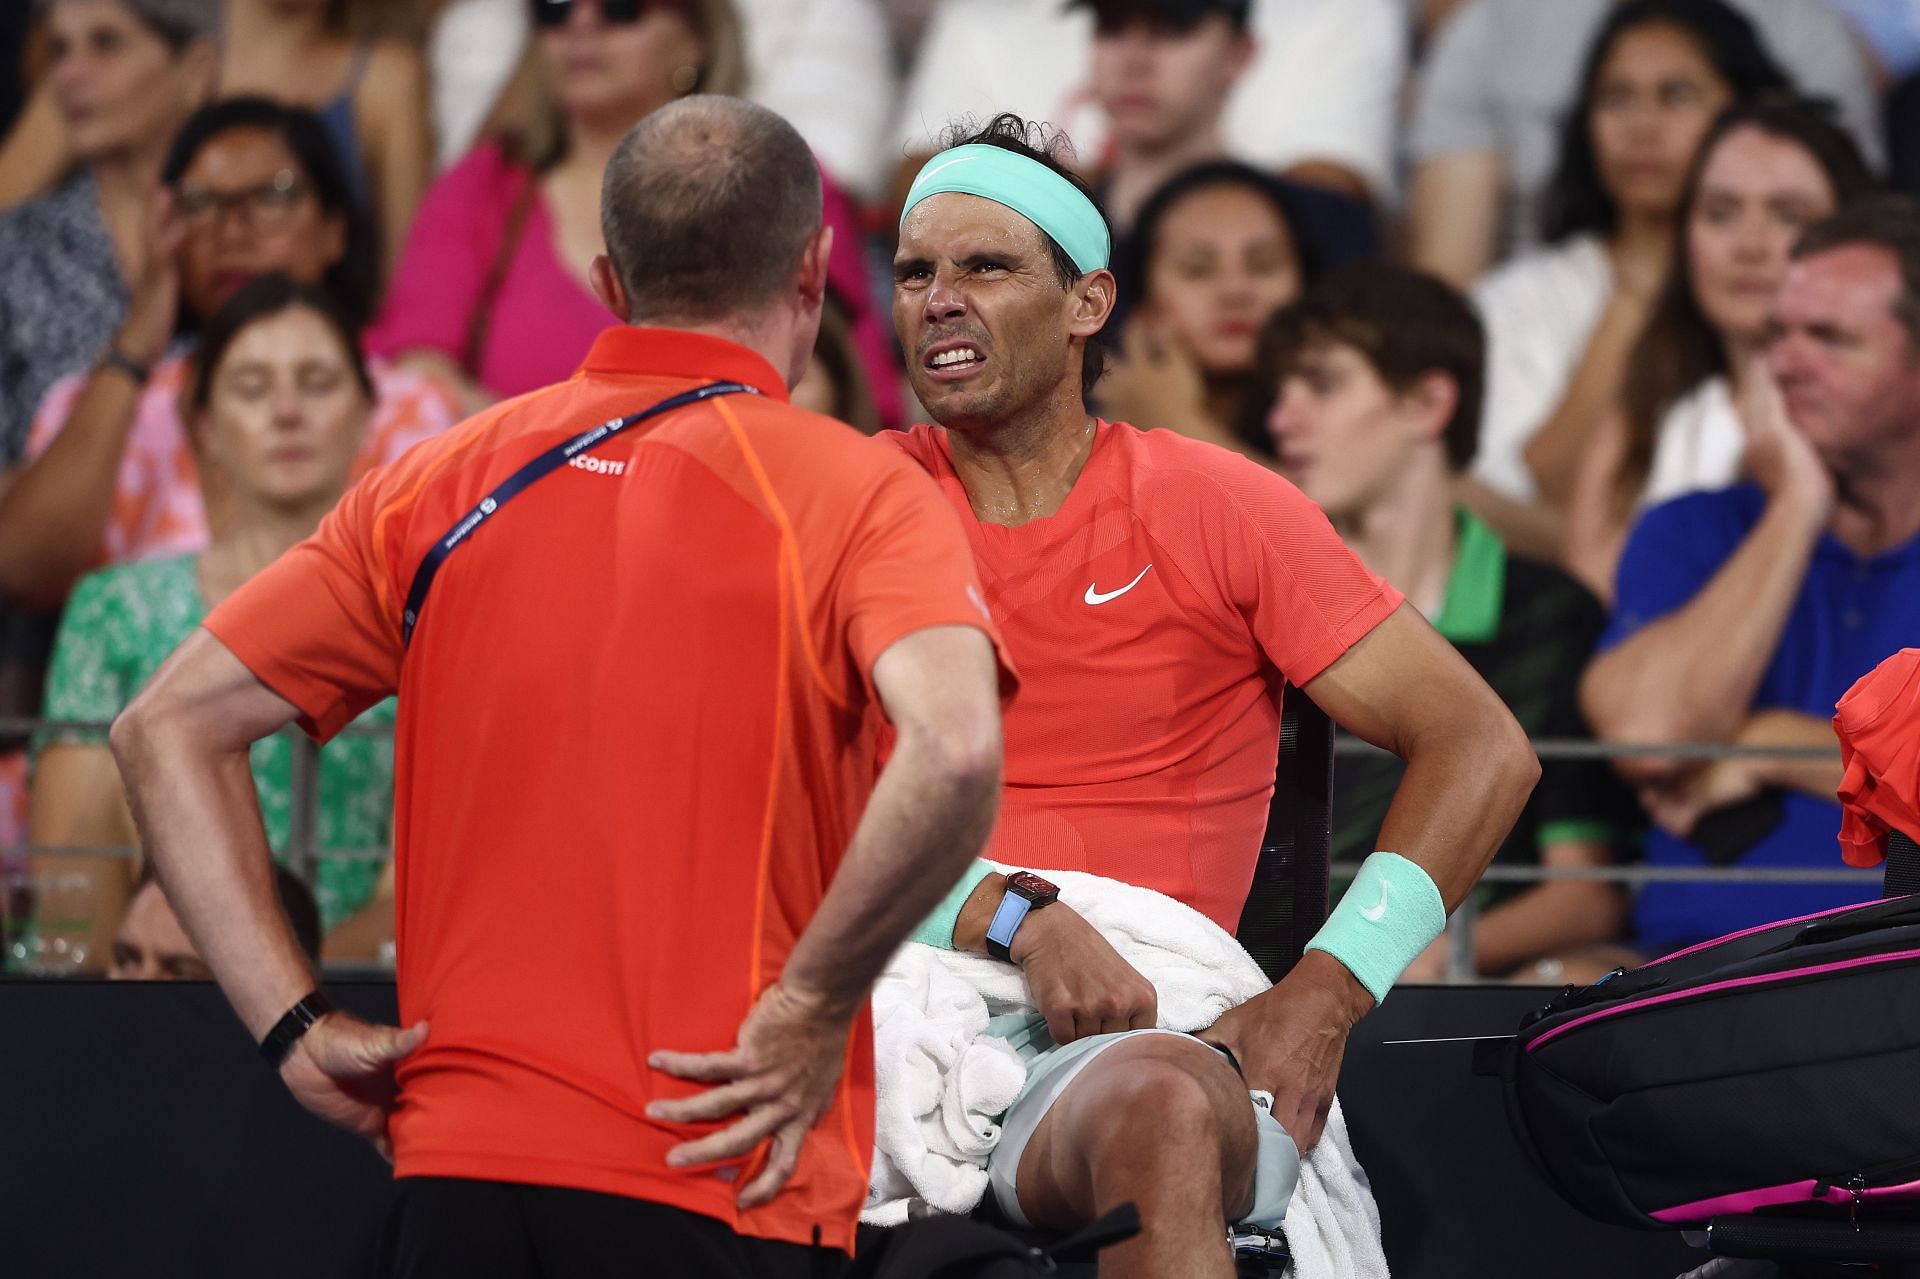 Rafael Nadal undergoes treatment during the Brisbane International